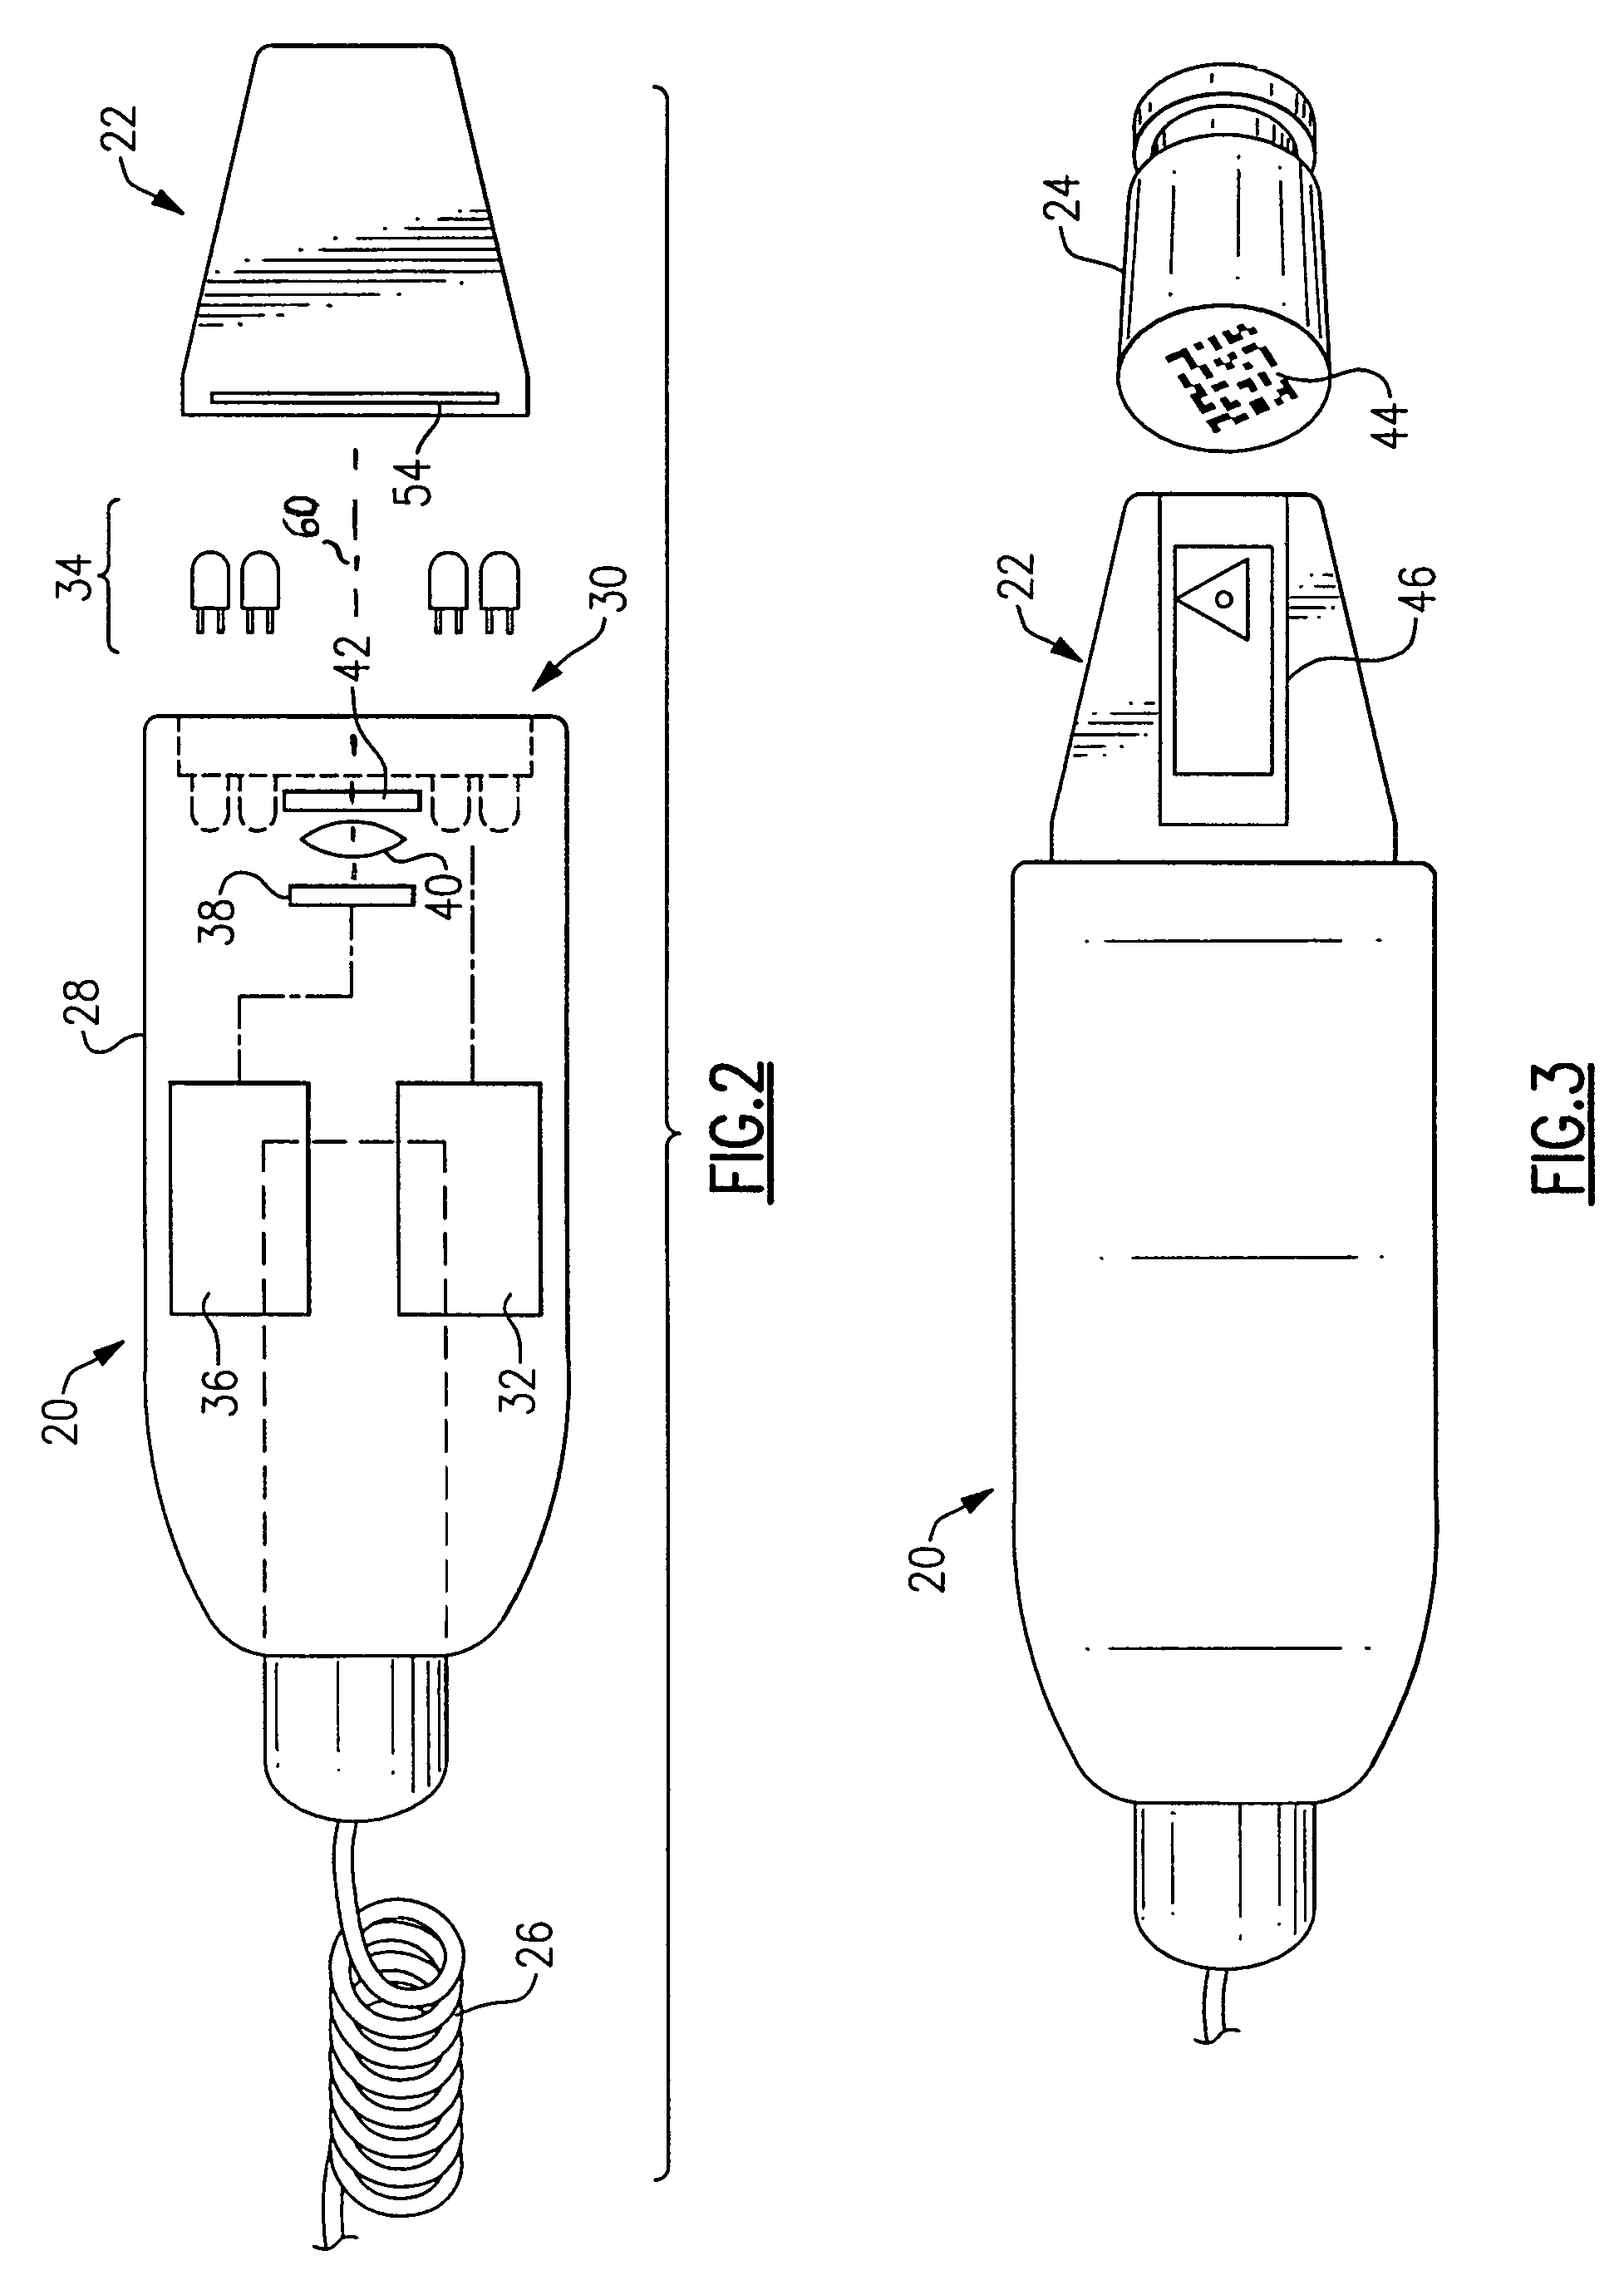 Fluorescent or luminescent optical symbol scanner